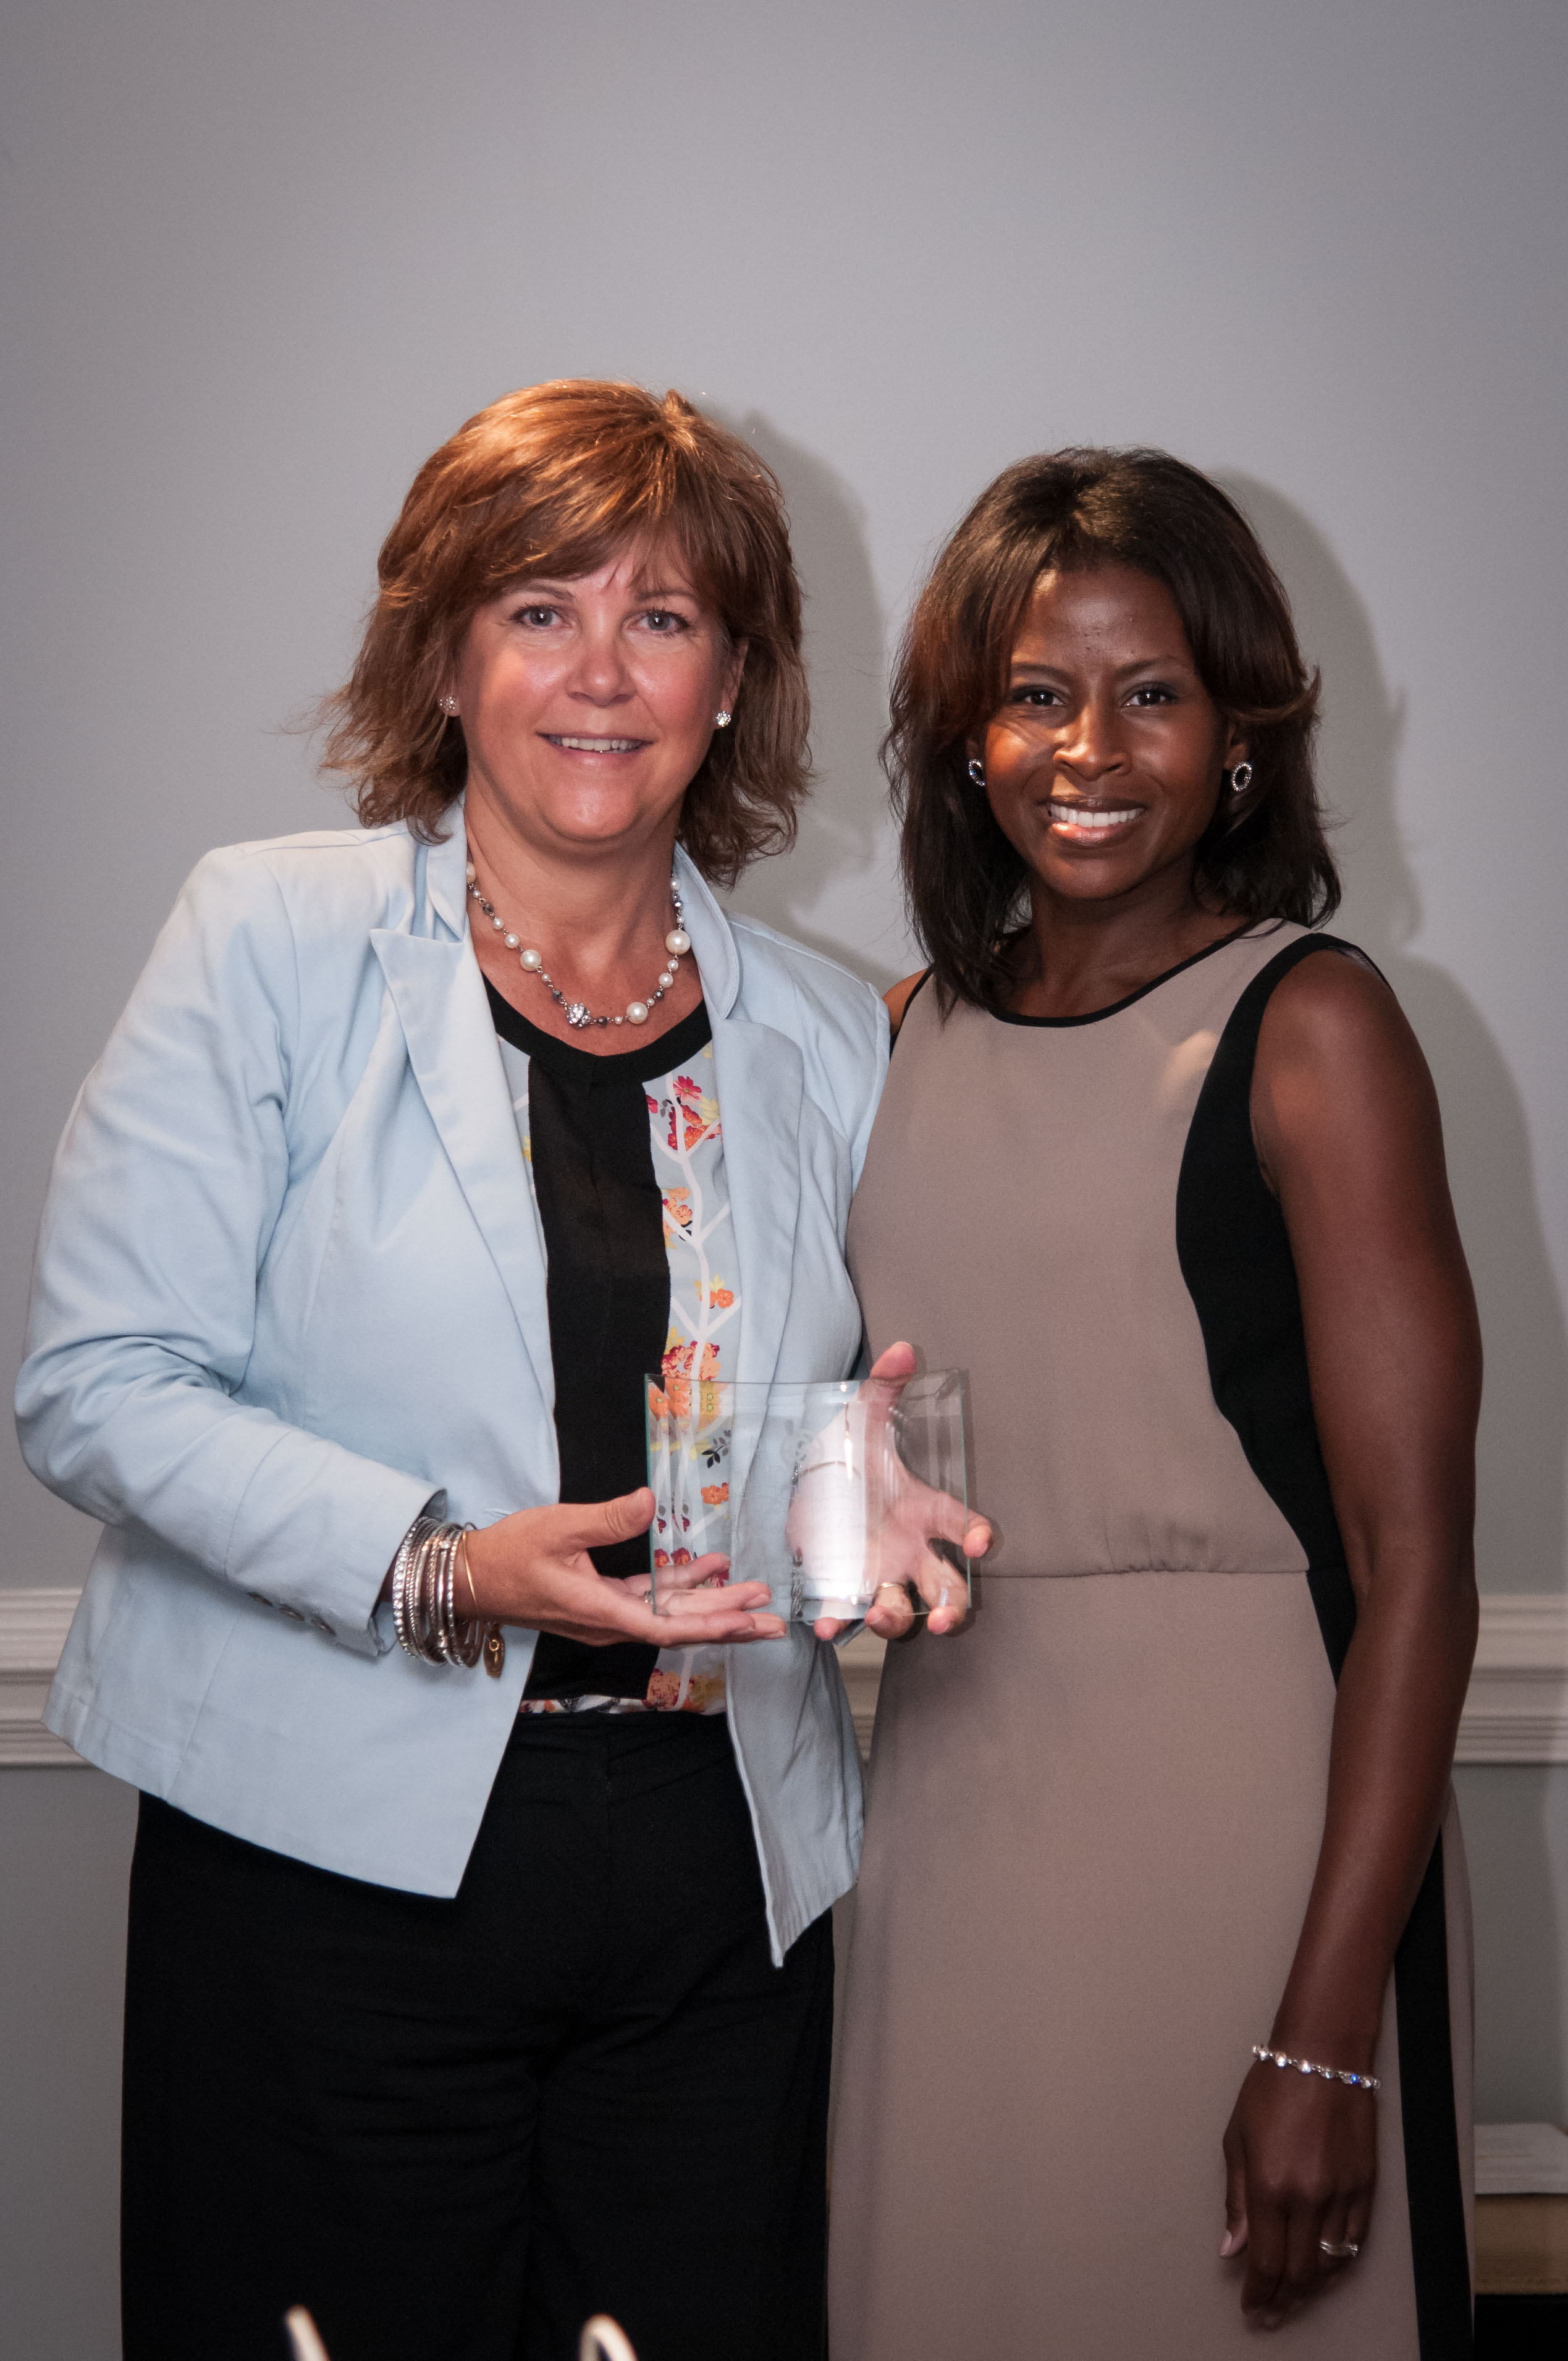 Celebrating Women Awards Emerging Business Leader Over $1M Nominees